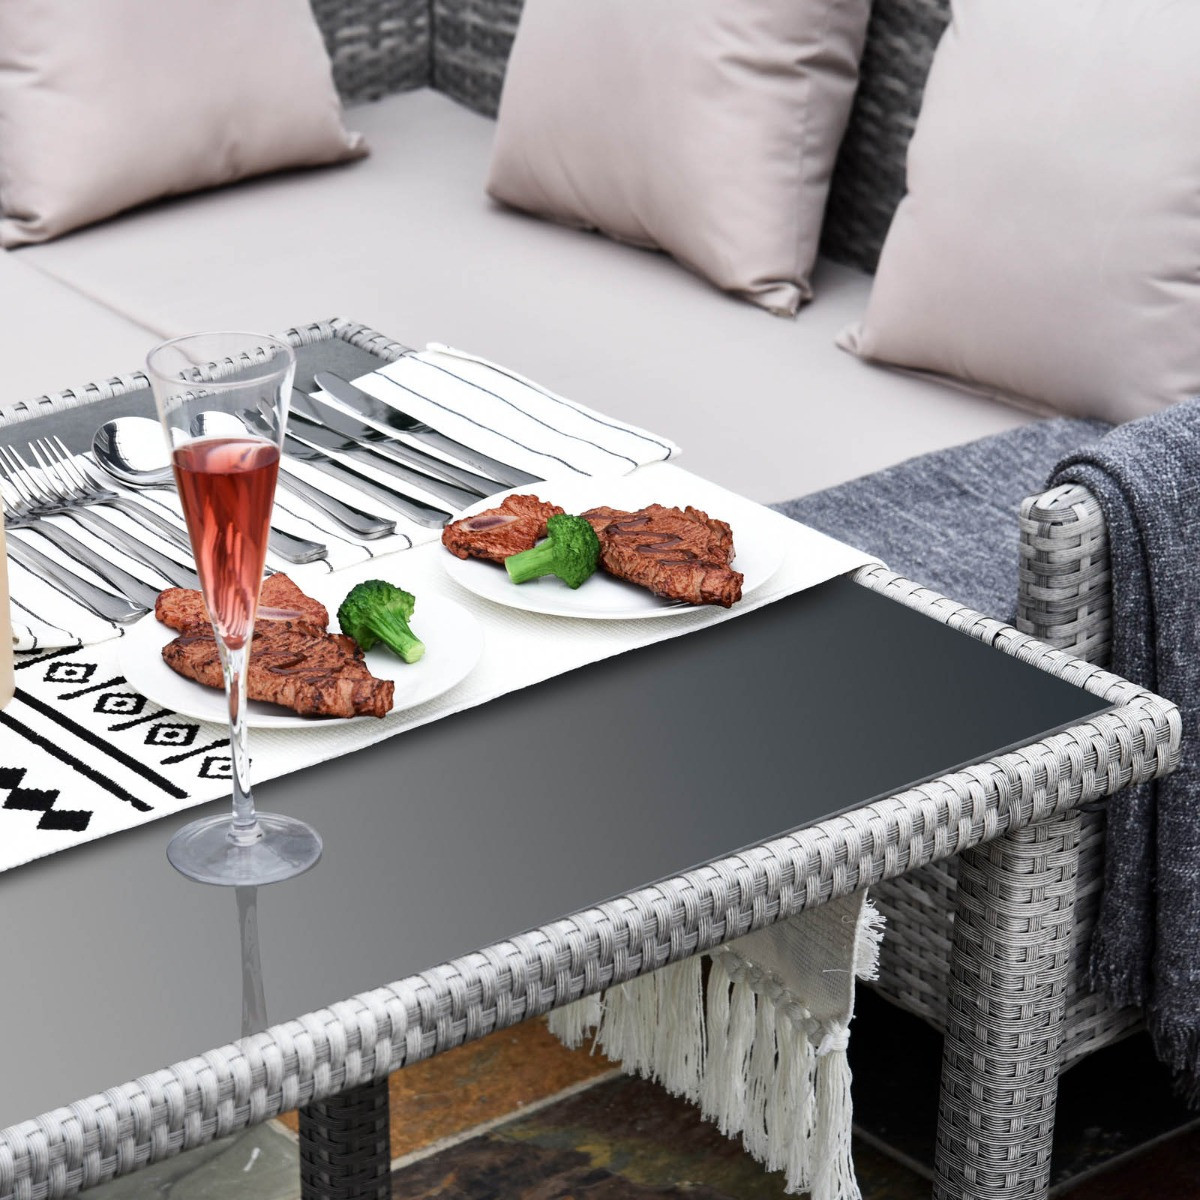 Outsunny Rattan Dining Corner Sofa Set, Light Grey - 6 Seater>